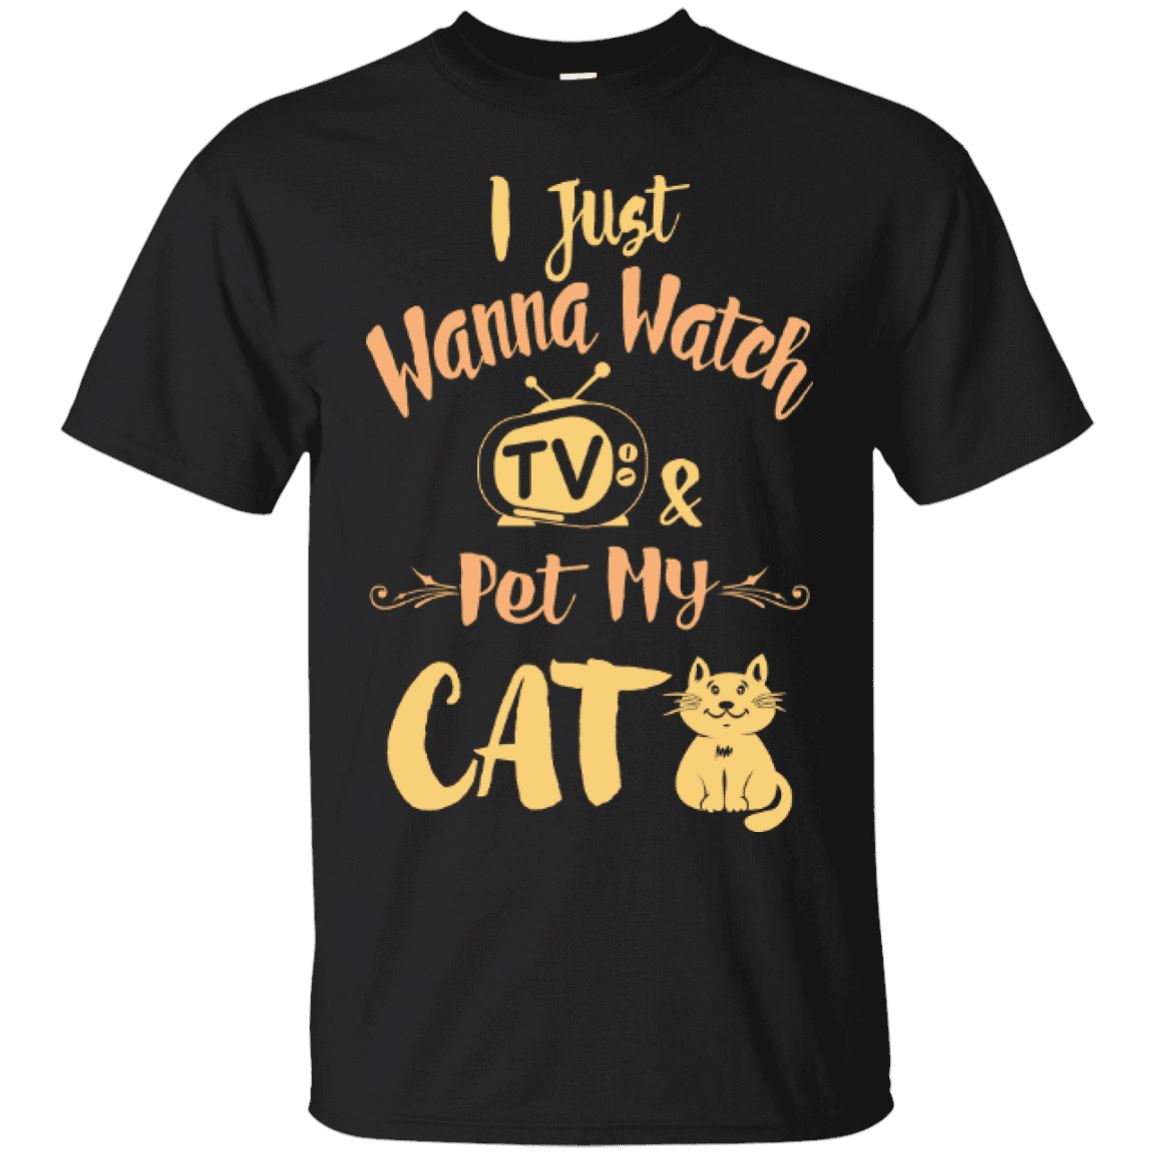 Cat Tee - I Just Wanna Watch TV & Pet My Cat - CatsForLife